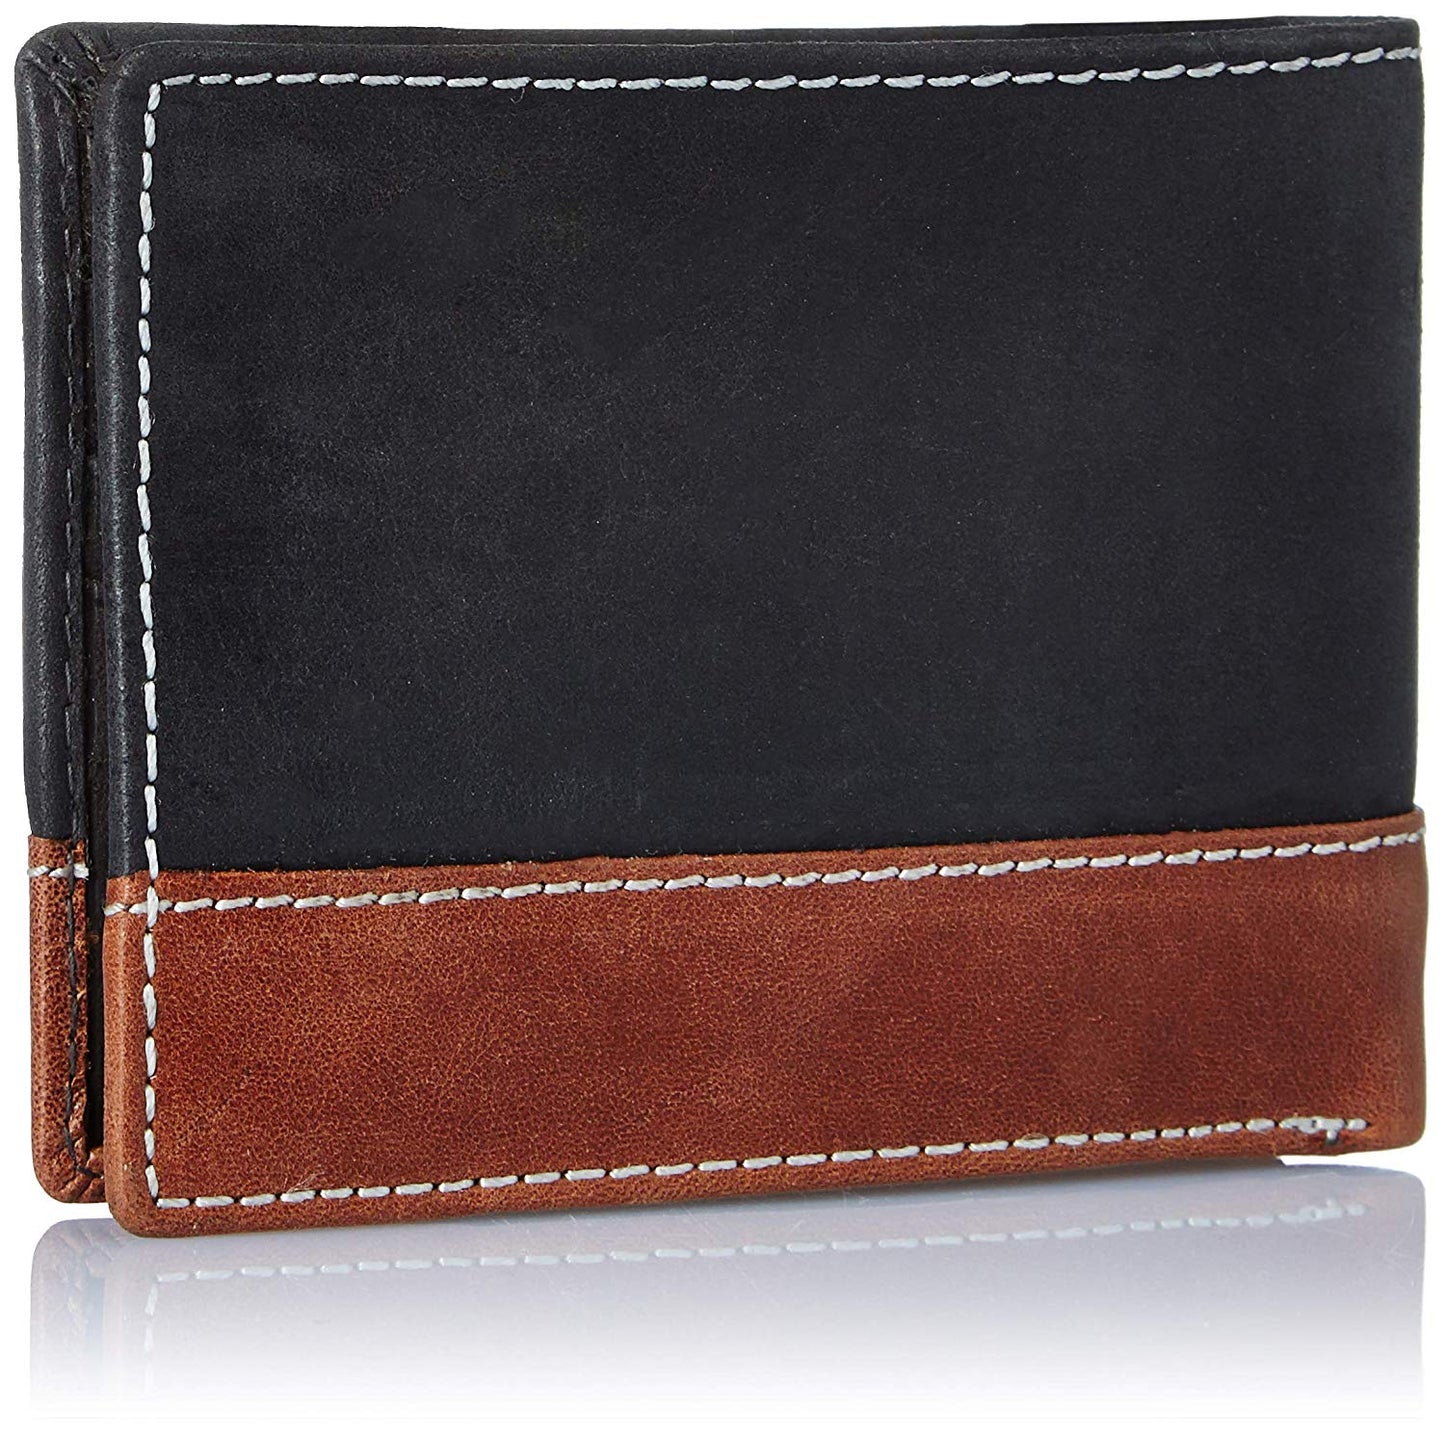 Black Colour Bi-Fold Italian Leather Slim Wallet ( 3 Card Slot + 2 Hidden Compartment +Coin Pocket + Cash Compartment )